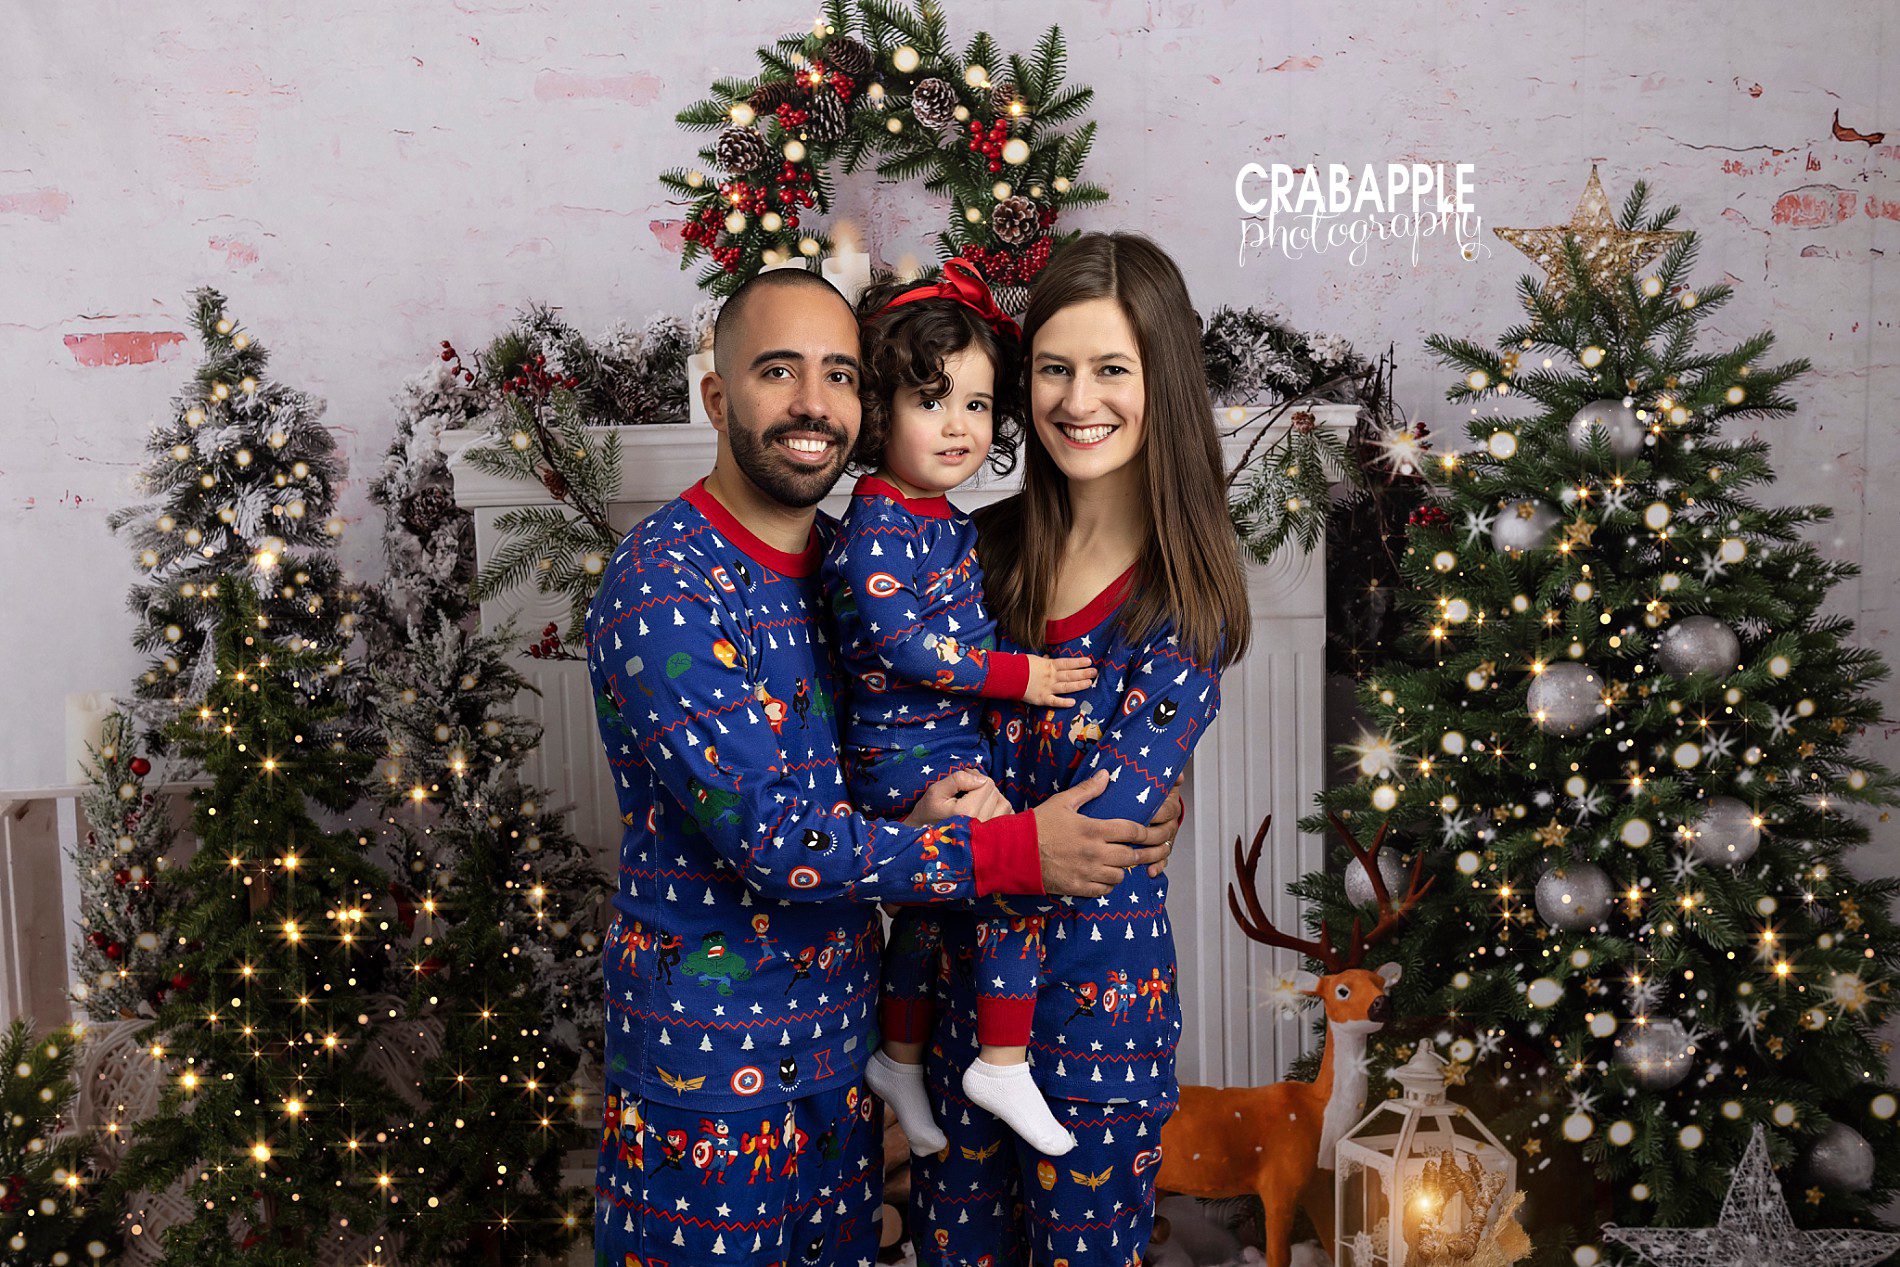 whole family matching pajamas for holiday photos